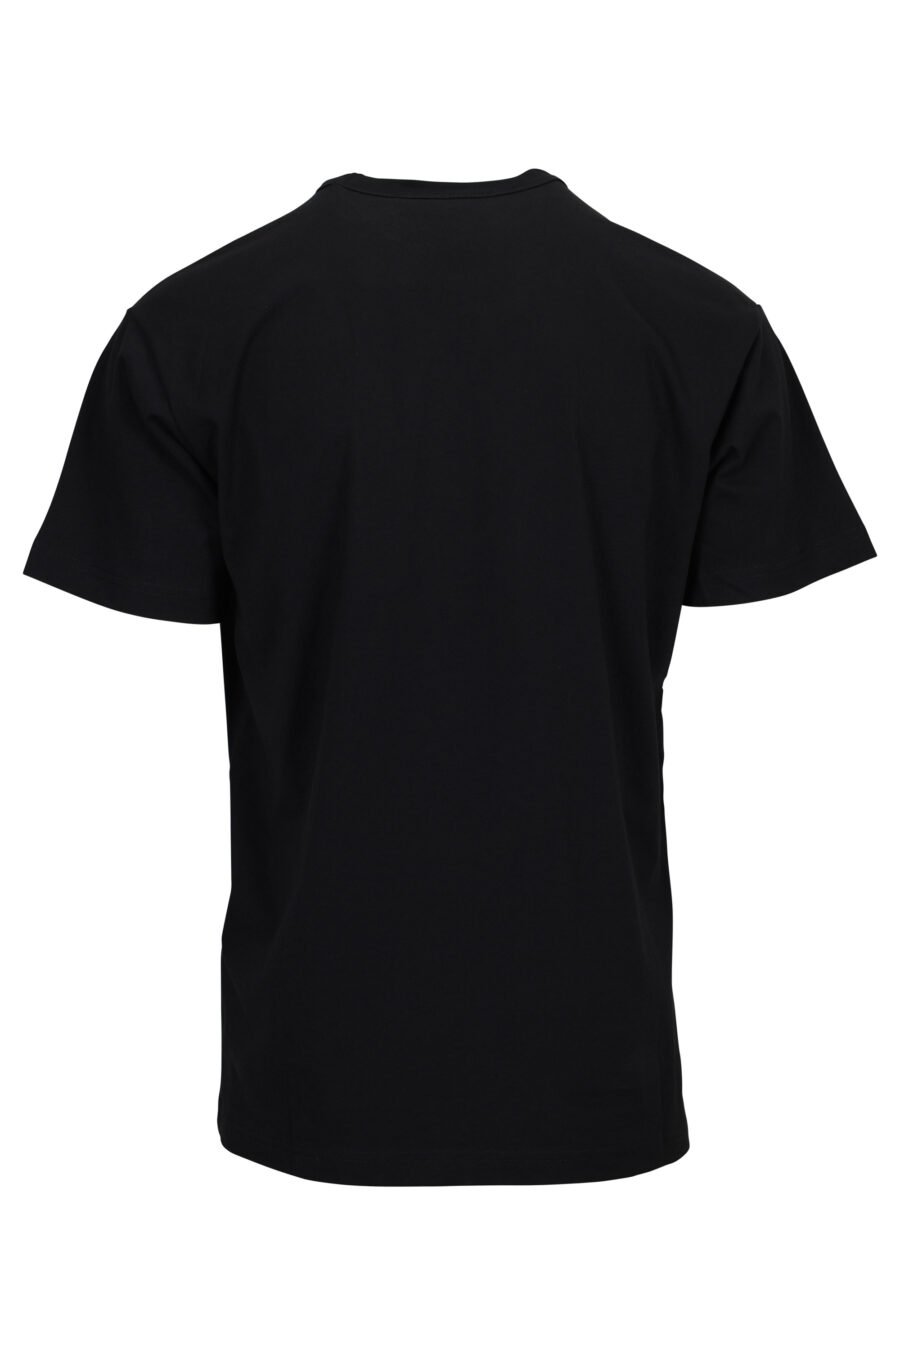 Schwarzes T-Shirt mit zerrissenem Barock Maxillogue - 8052019603170 1